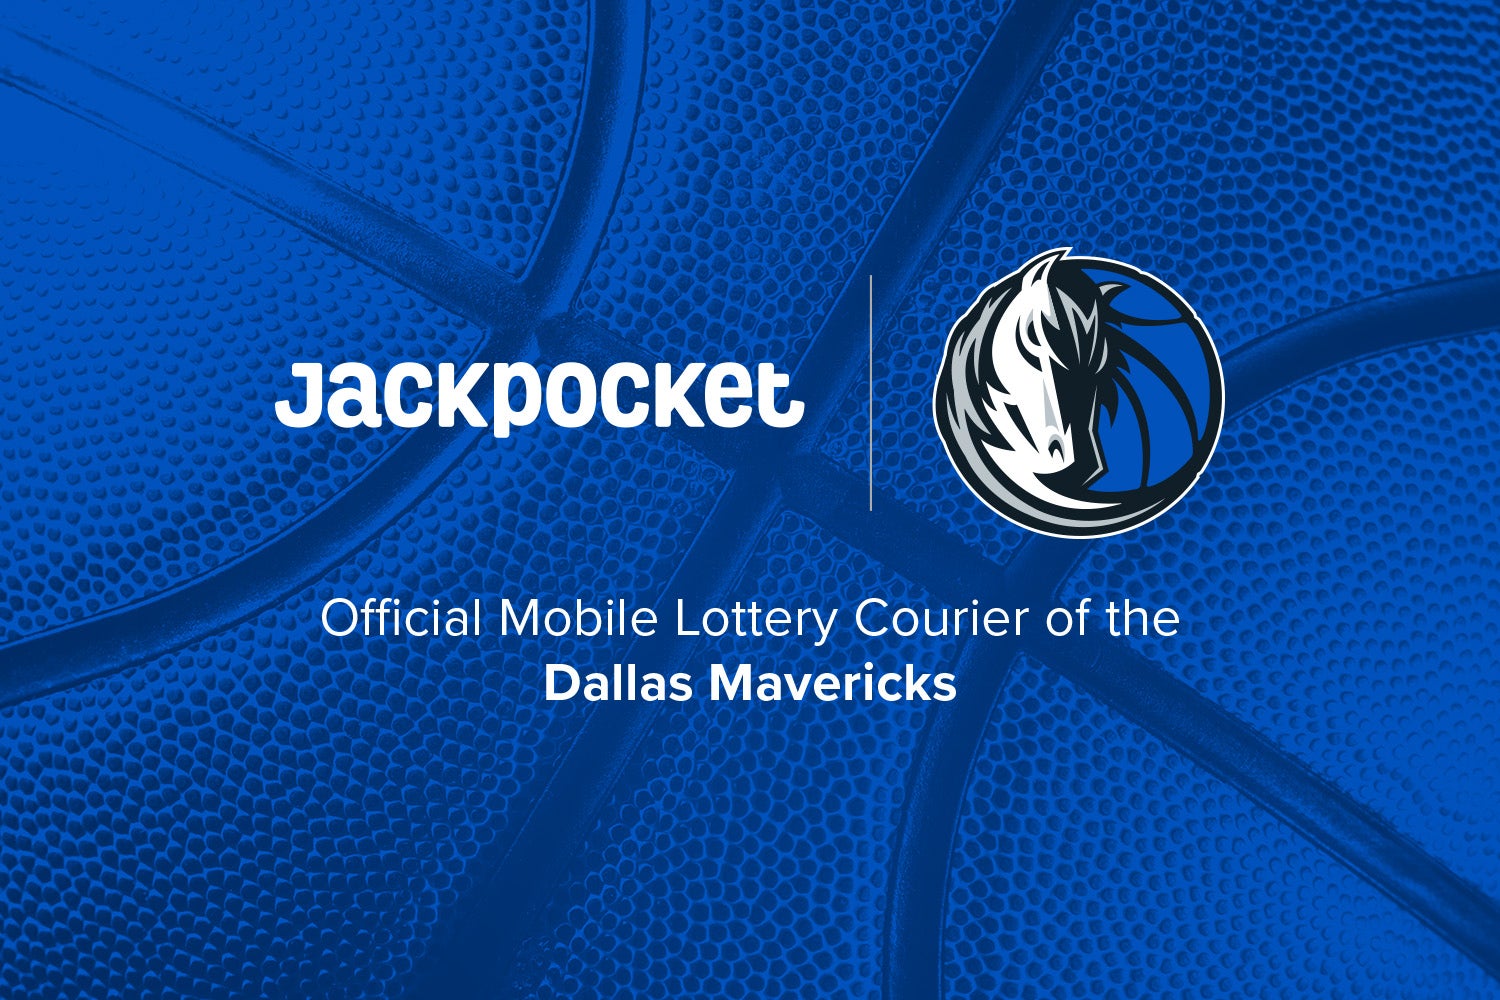 Jackpocket and the Dallas Mavericks